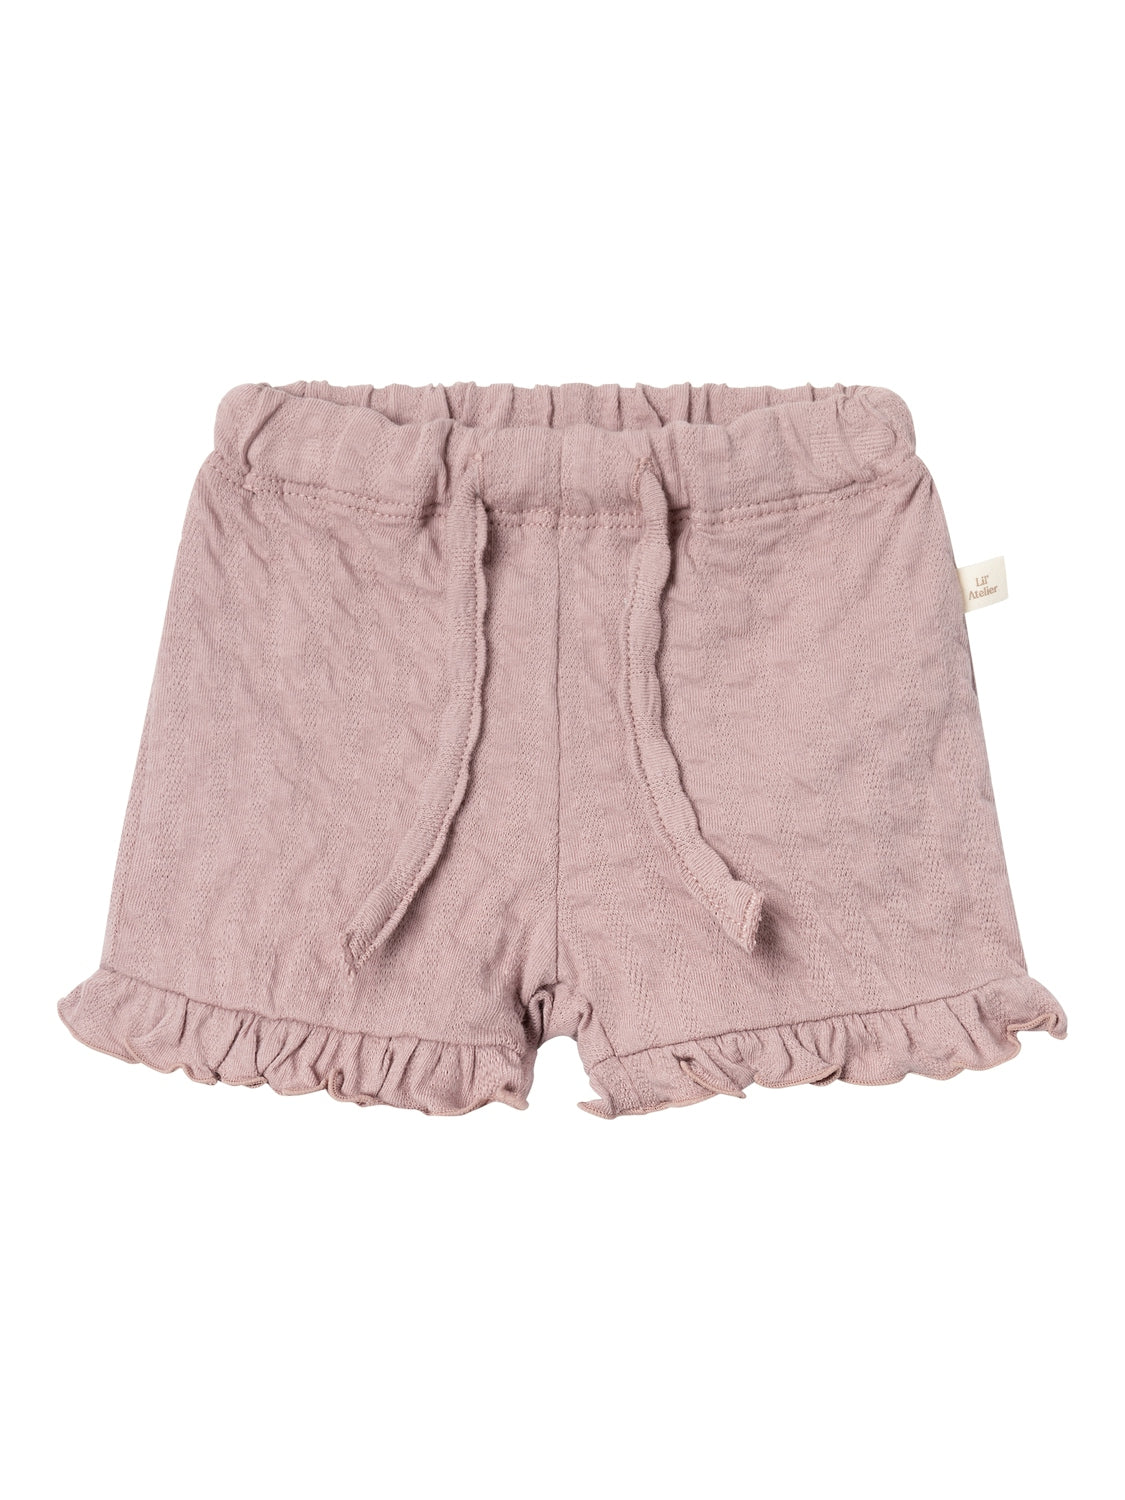 Lil atelier - Jamina shorts - Fawn